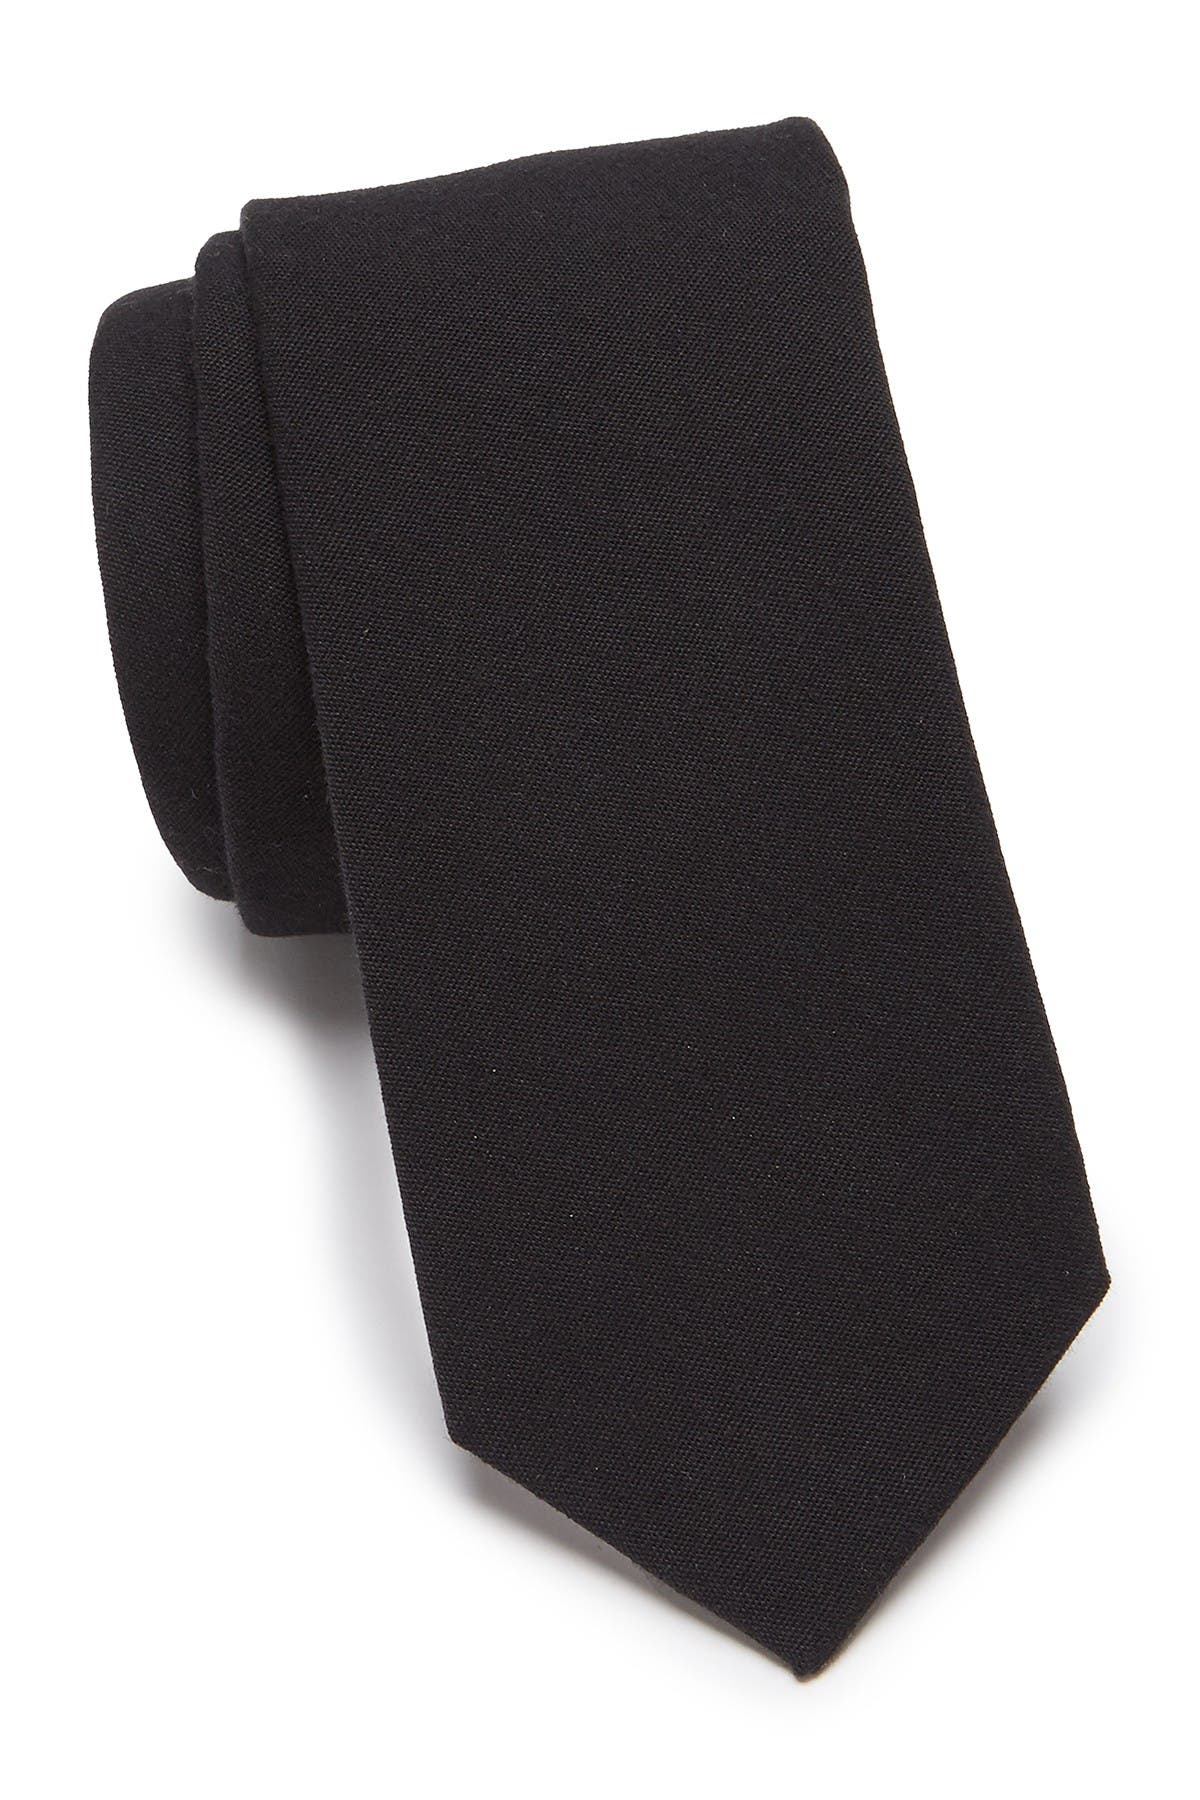 Original Penguin Tillman Solid Tie In Black | ModeSens